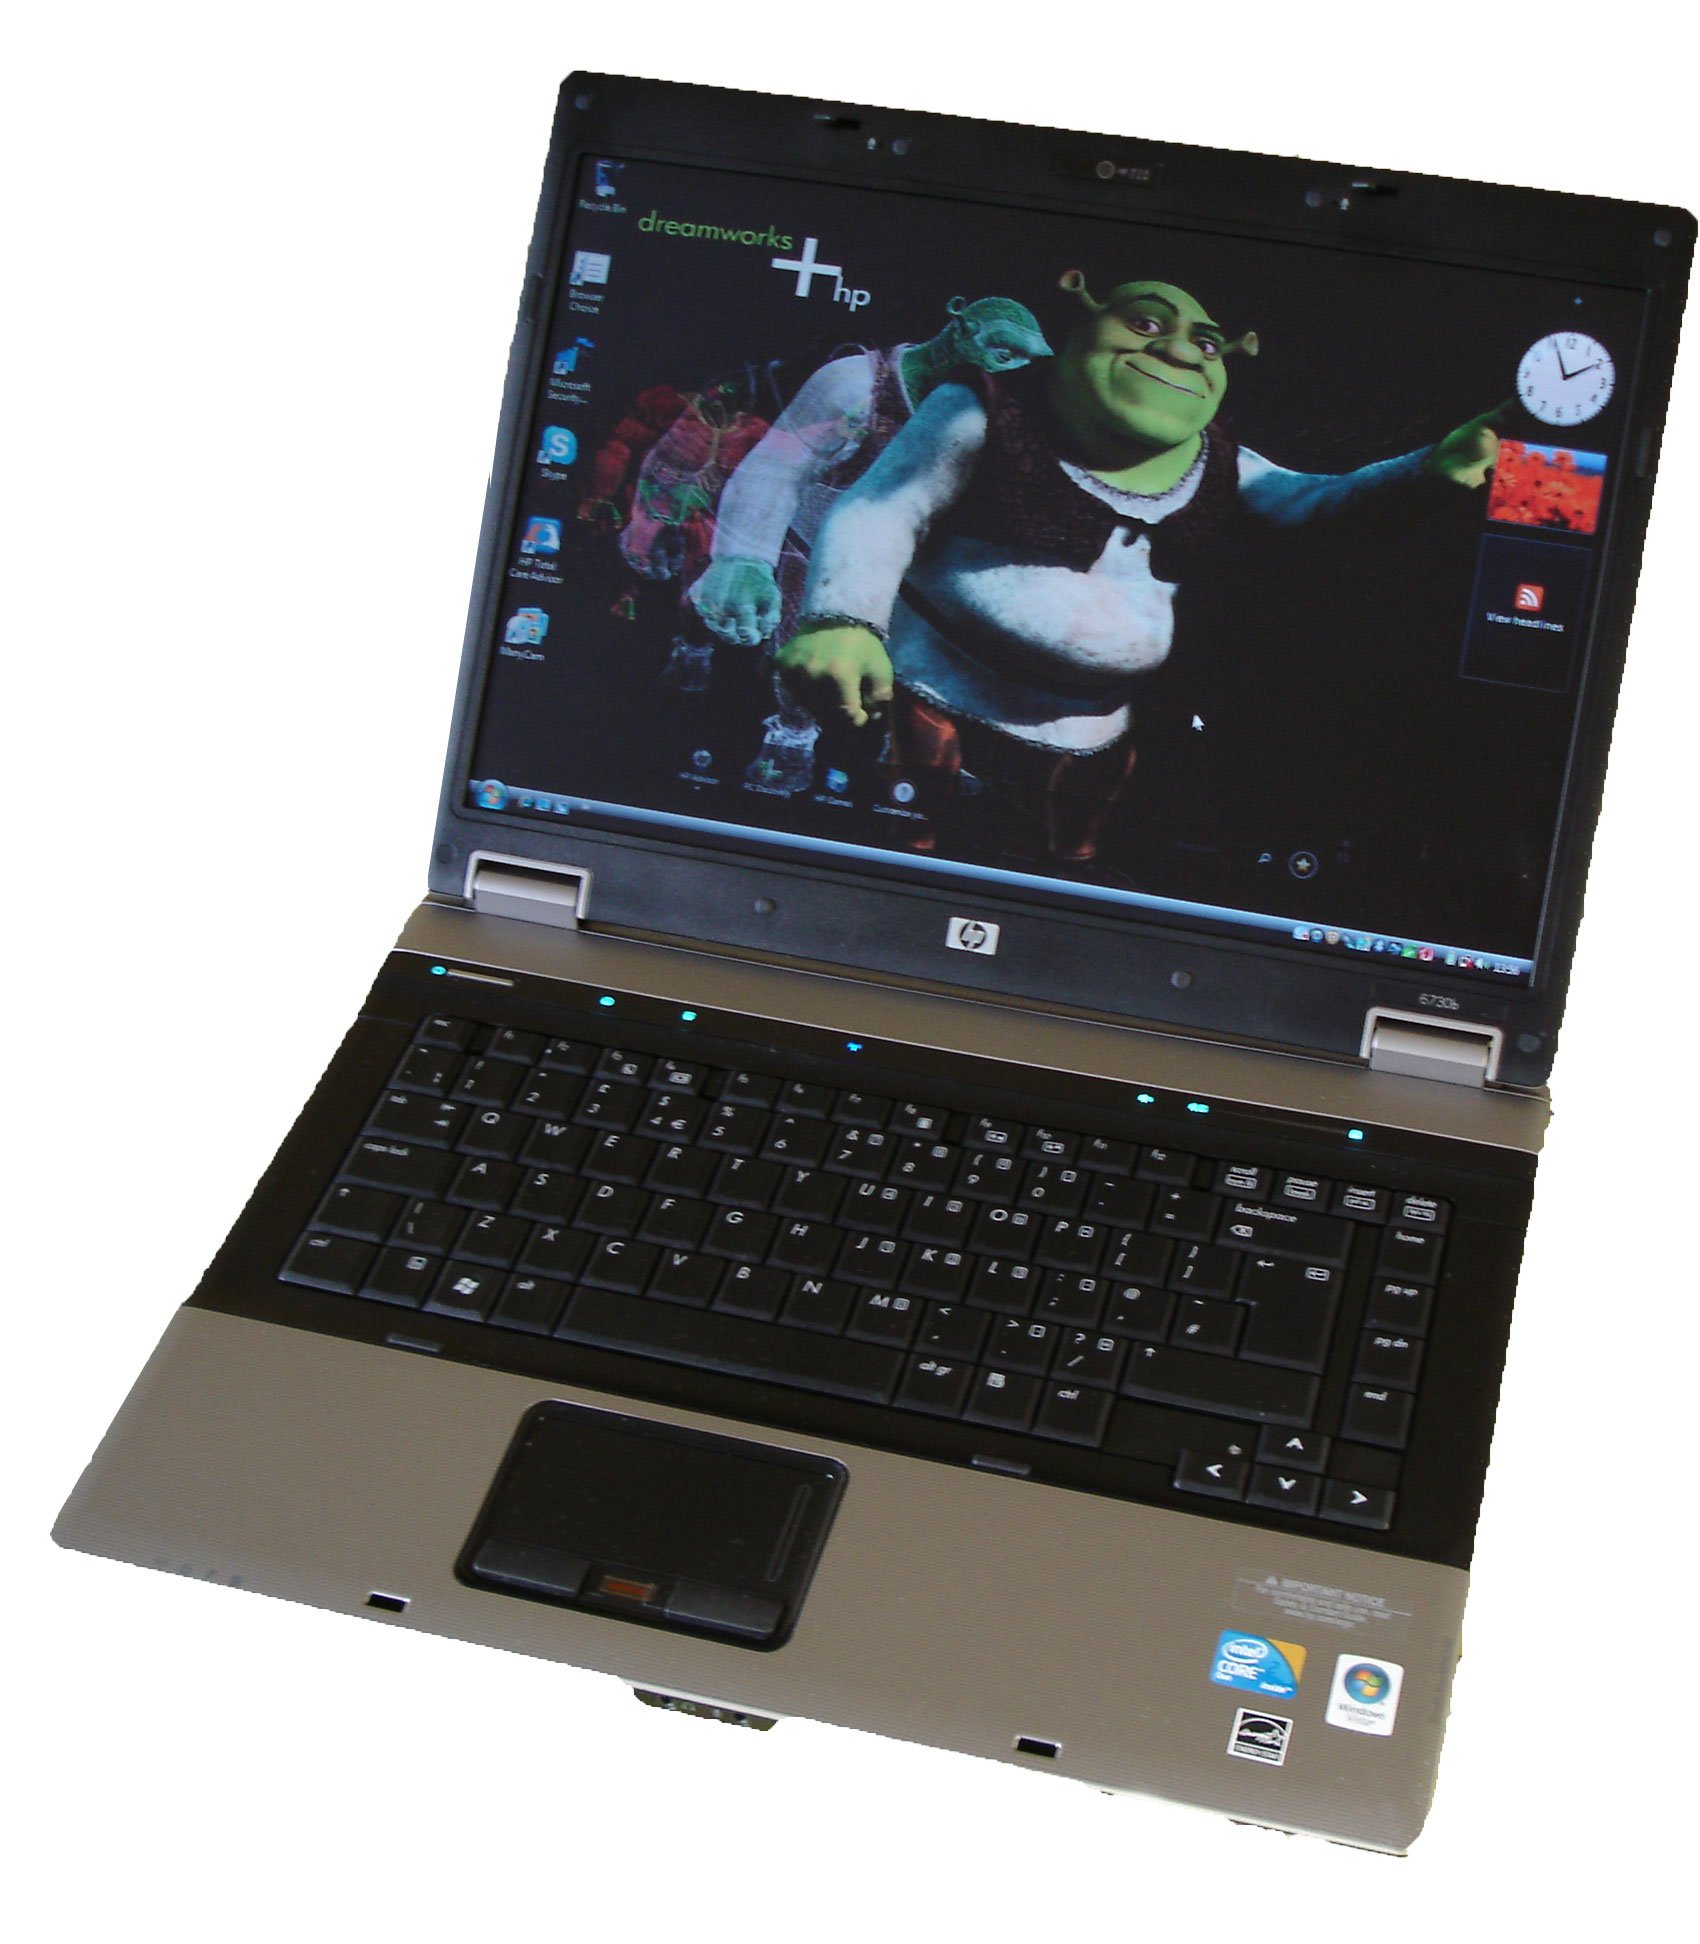 HP 6730b Laptop 3GB 320GB Bluetooth Wifi 2.66Ghz 15.4"